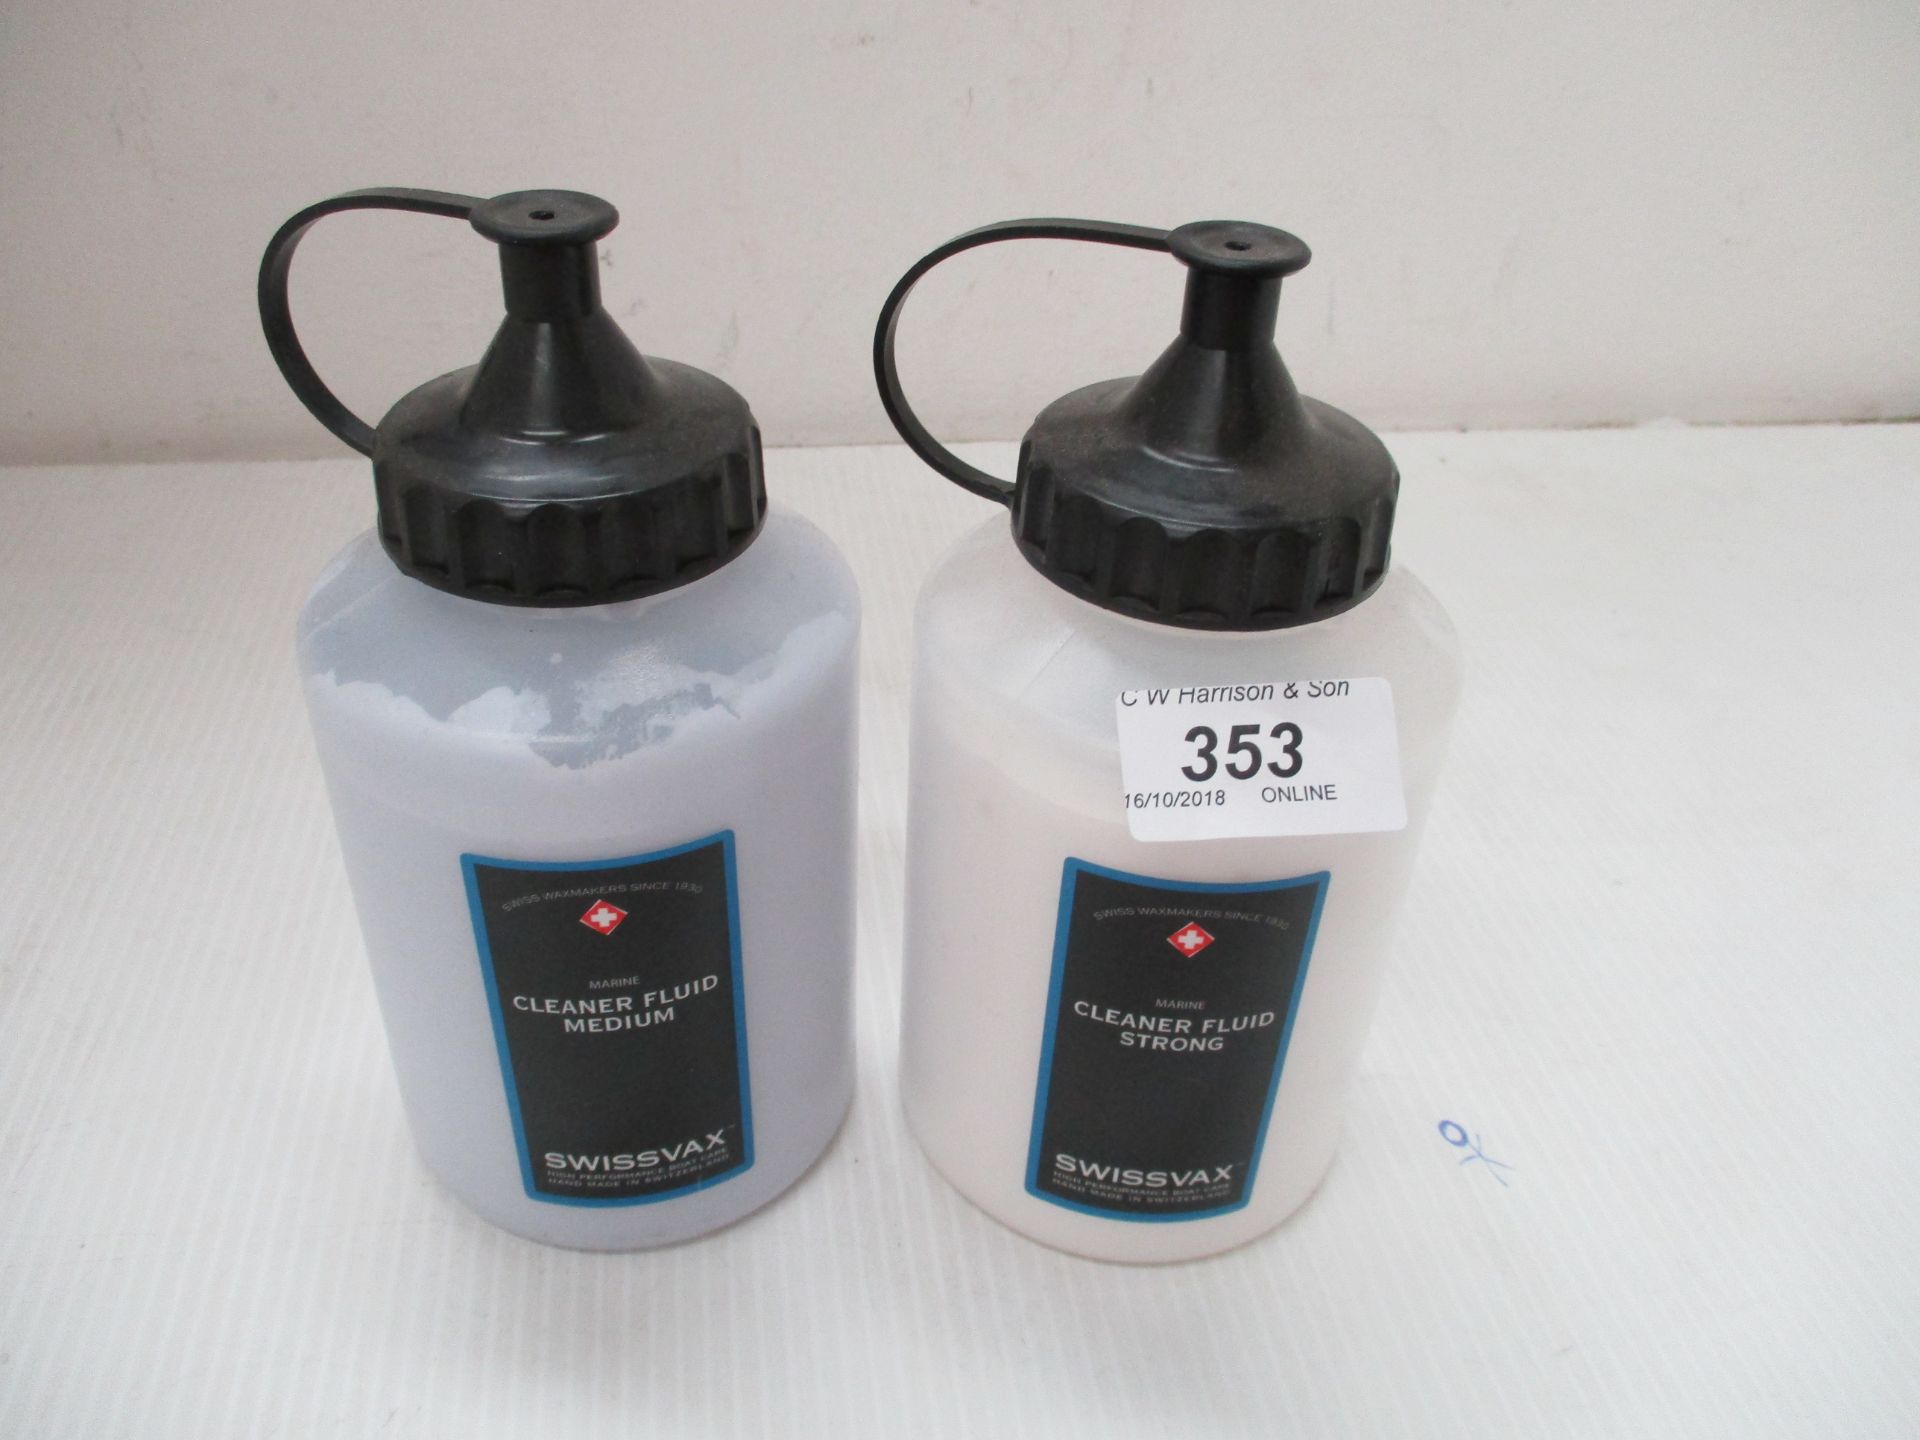 8 x 500ml bottles of Swissvax High Performance marine cleaner fluid (medium/strong)